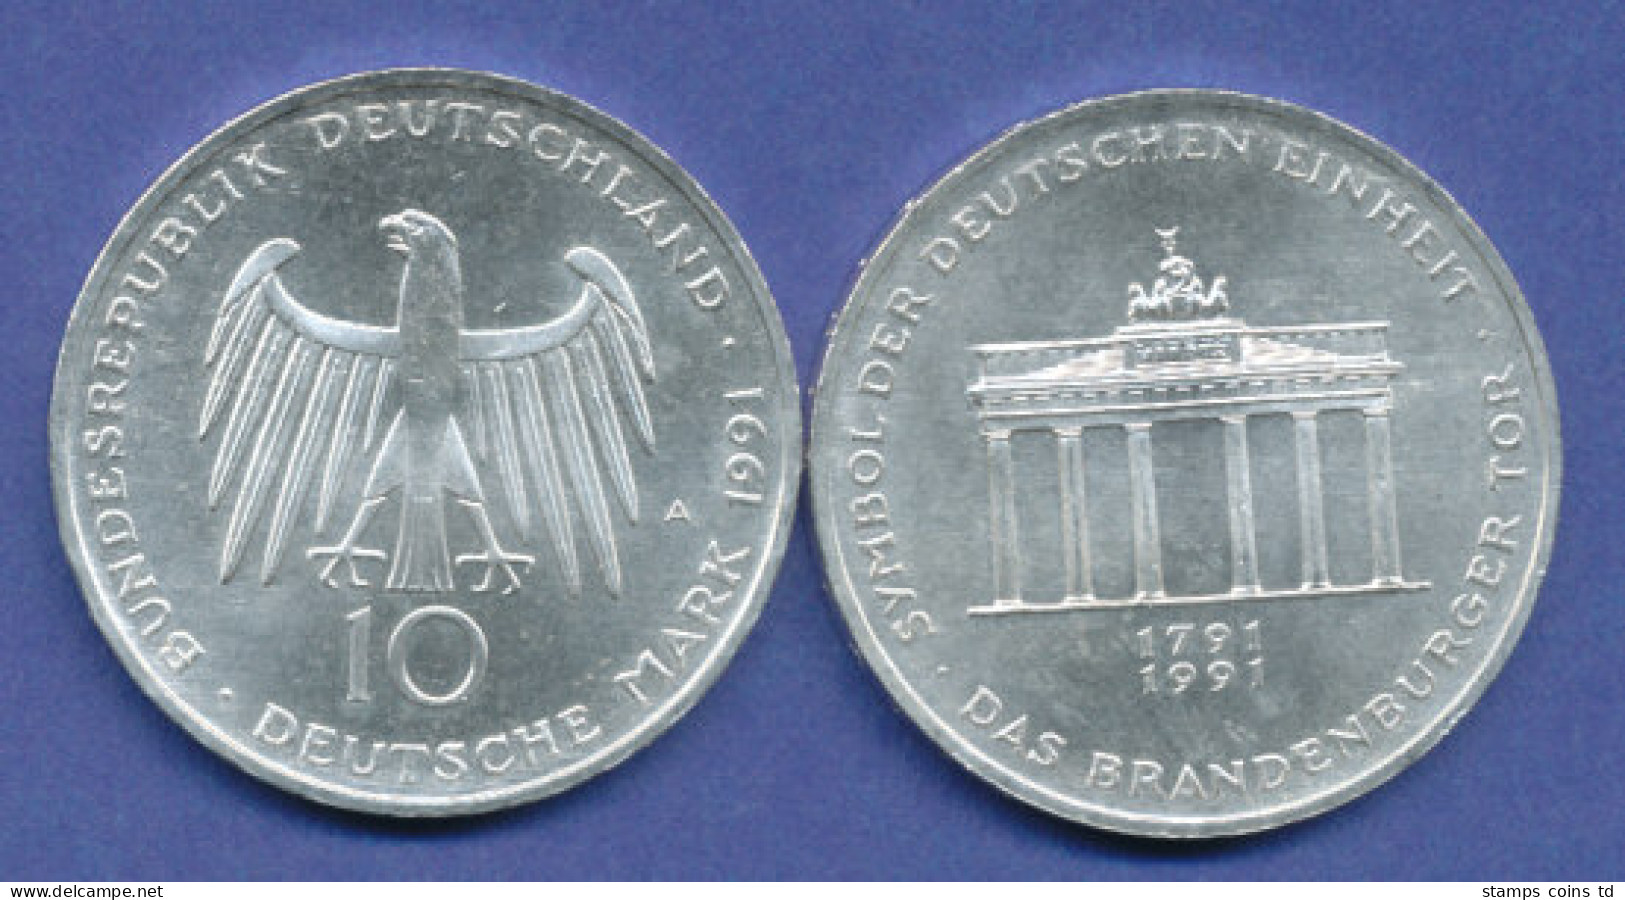 Bundesrepublik 10DM Silber-Gedenkmünze 1991, 200 Jahre Brandenburger Tor - 10 Marchi